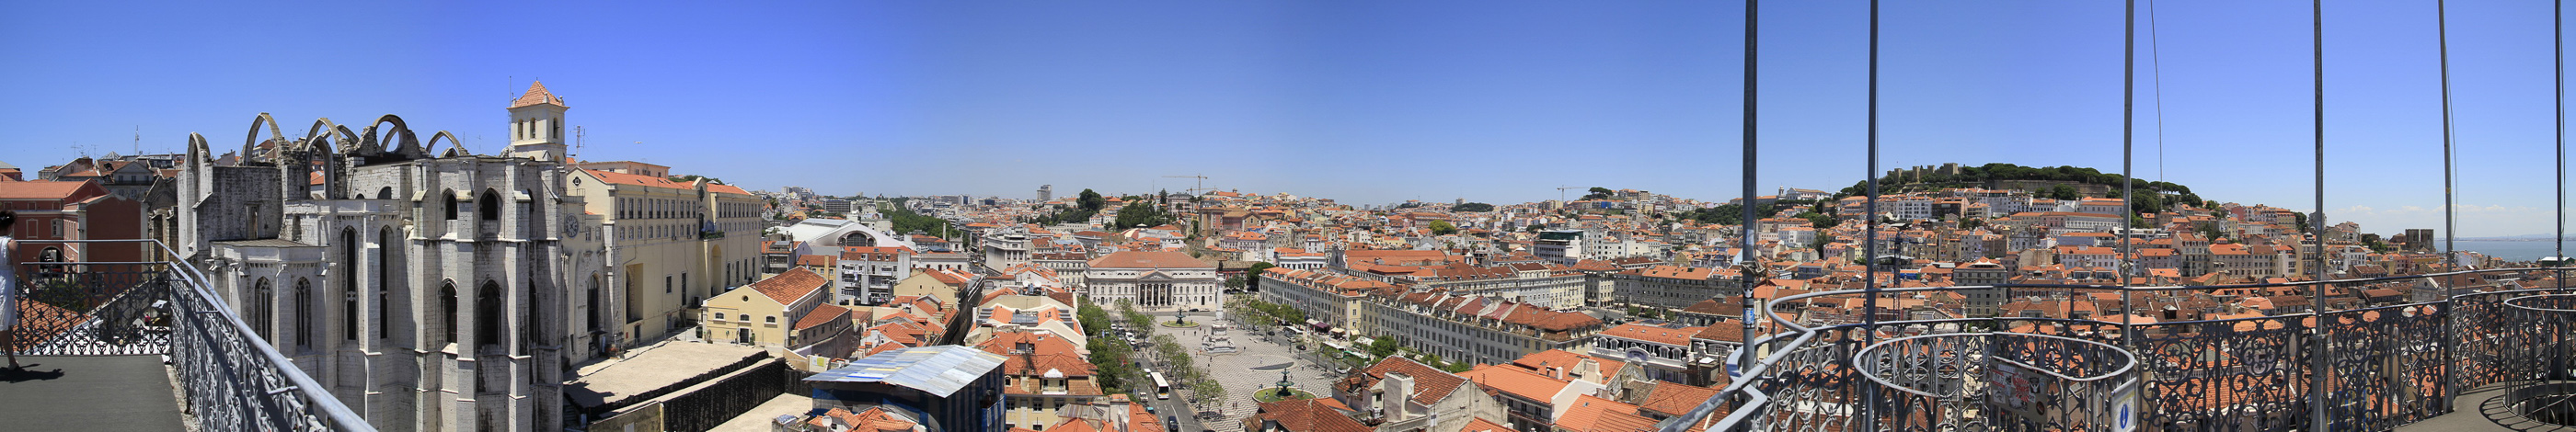 Lissabon-pano-004